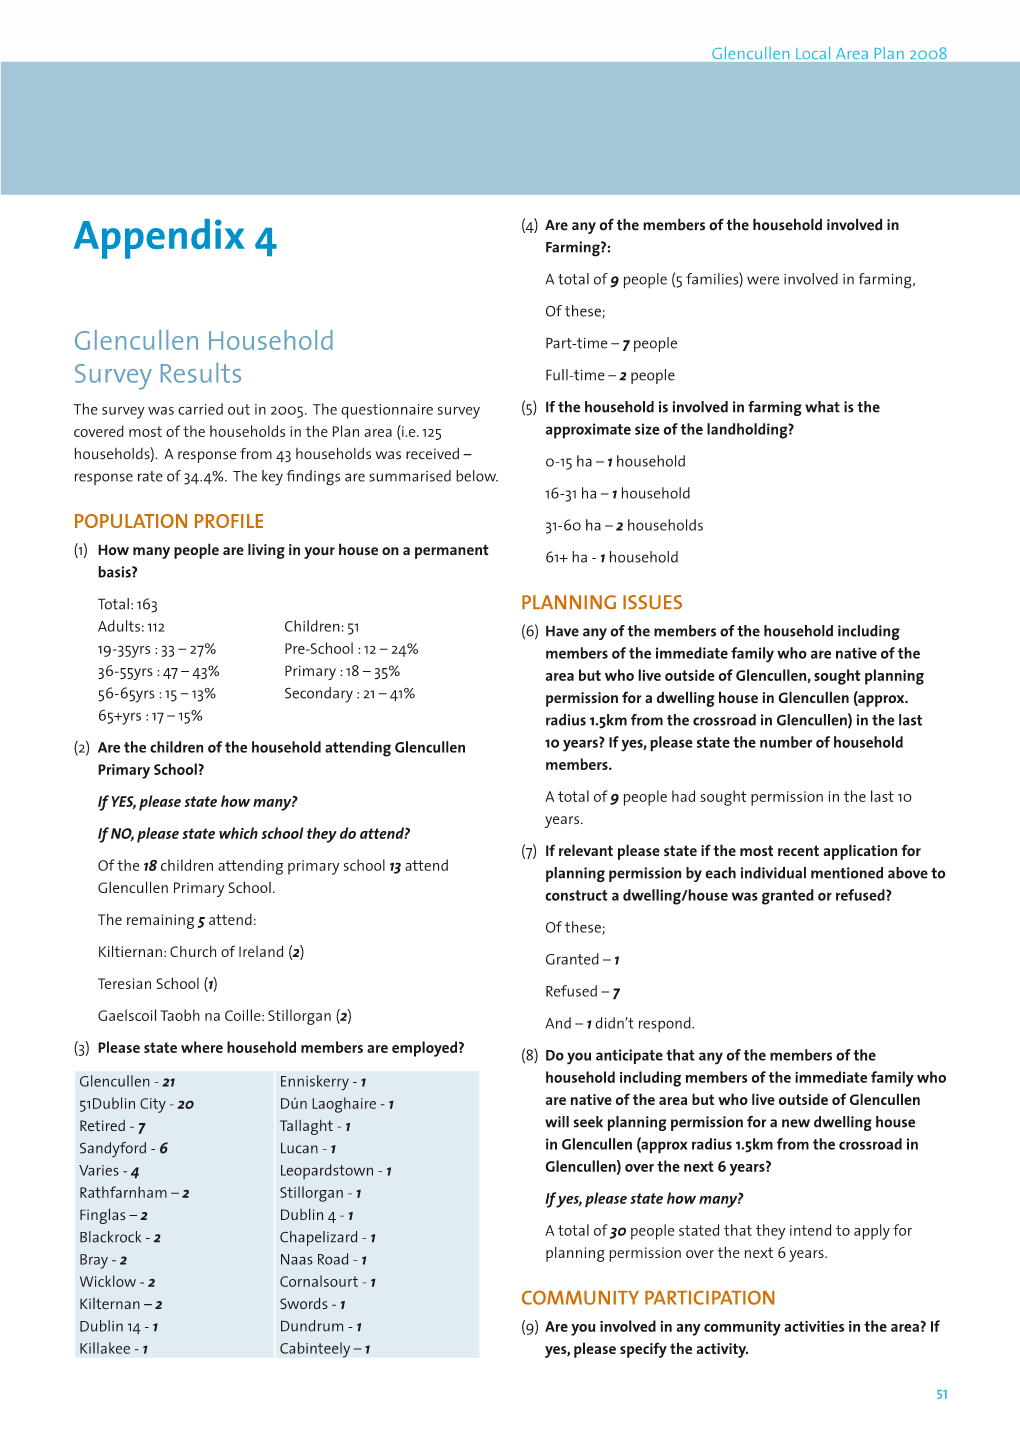 Appendix 4: Glencullen Household of Survey Results